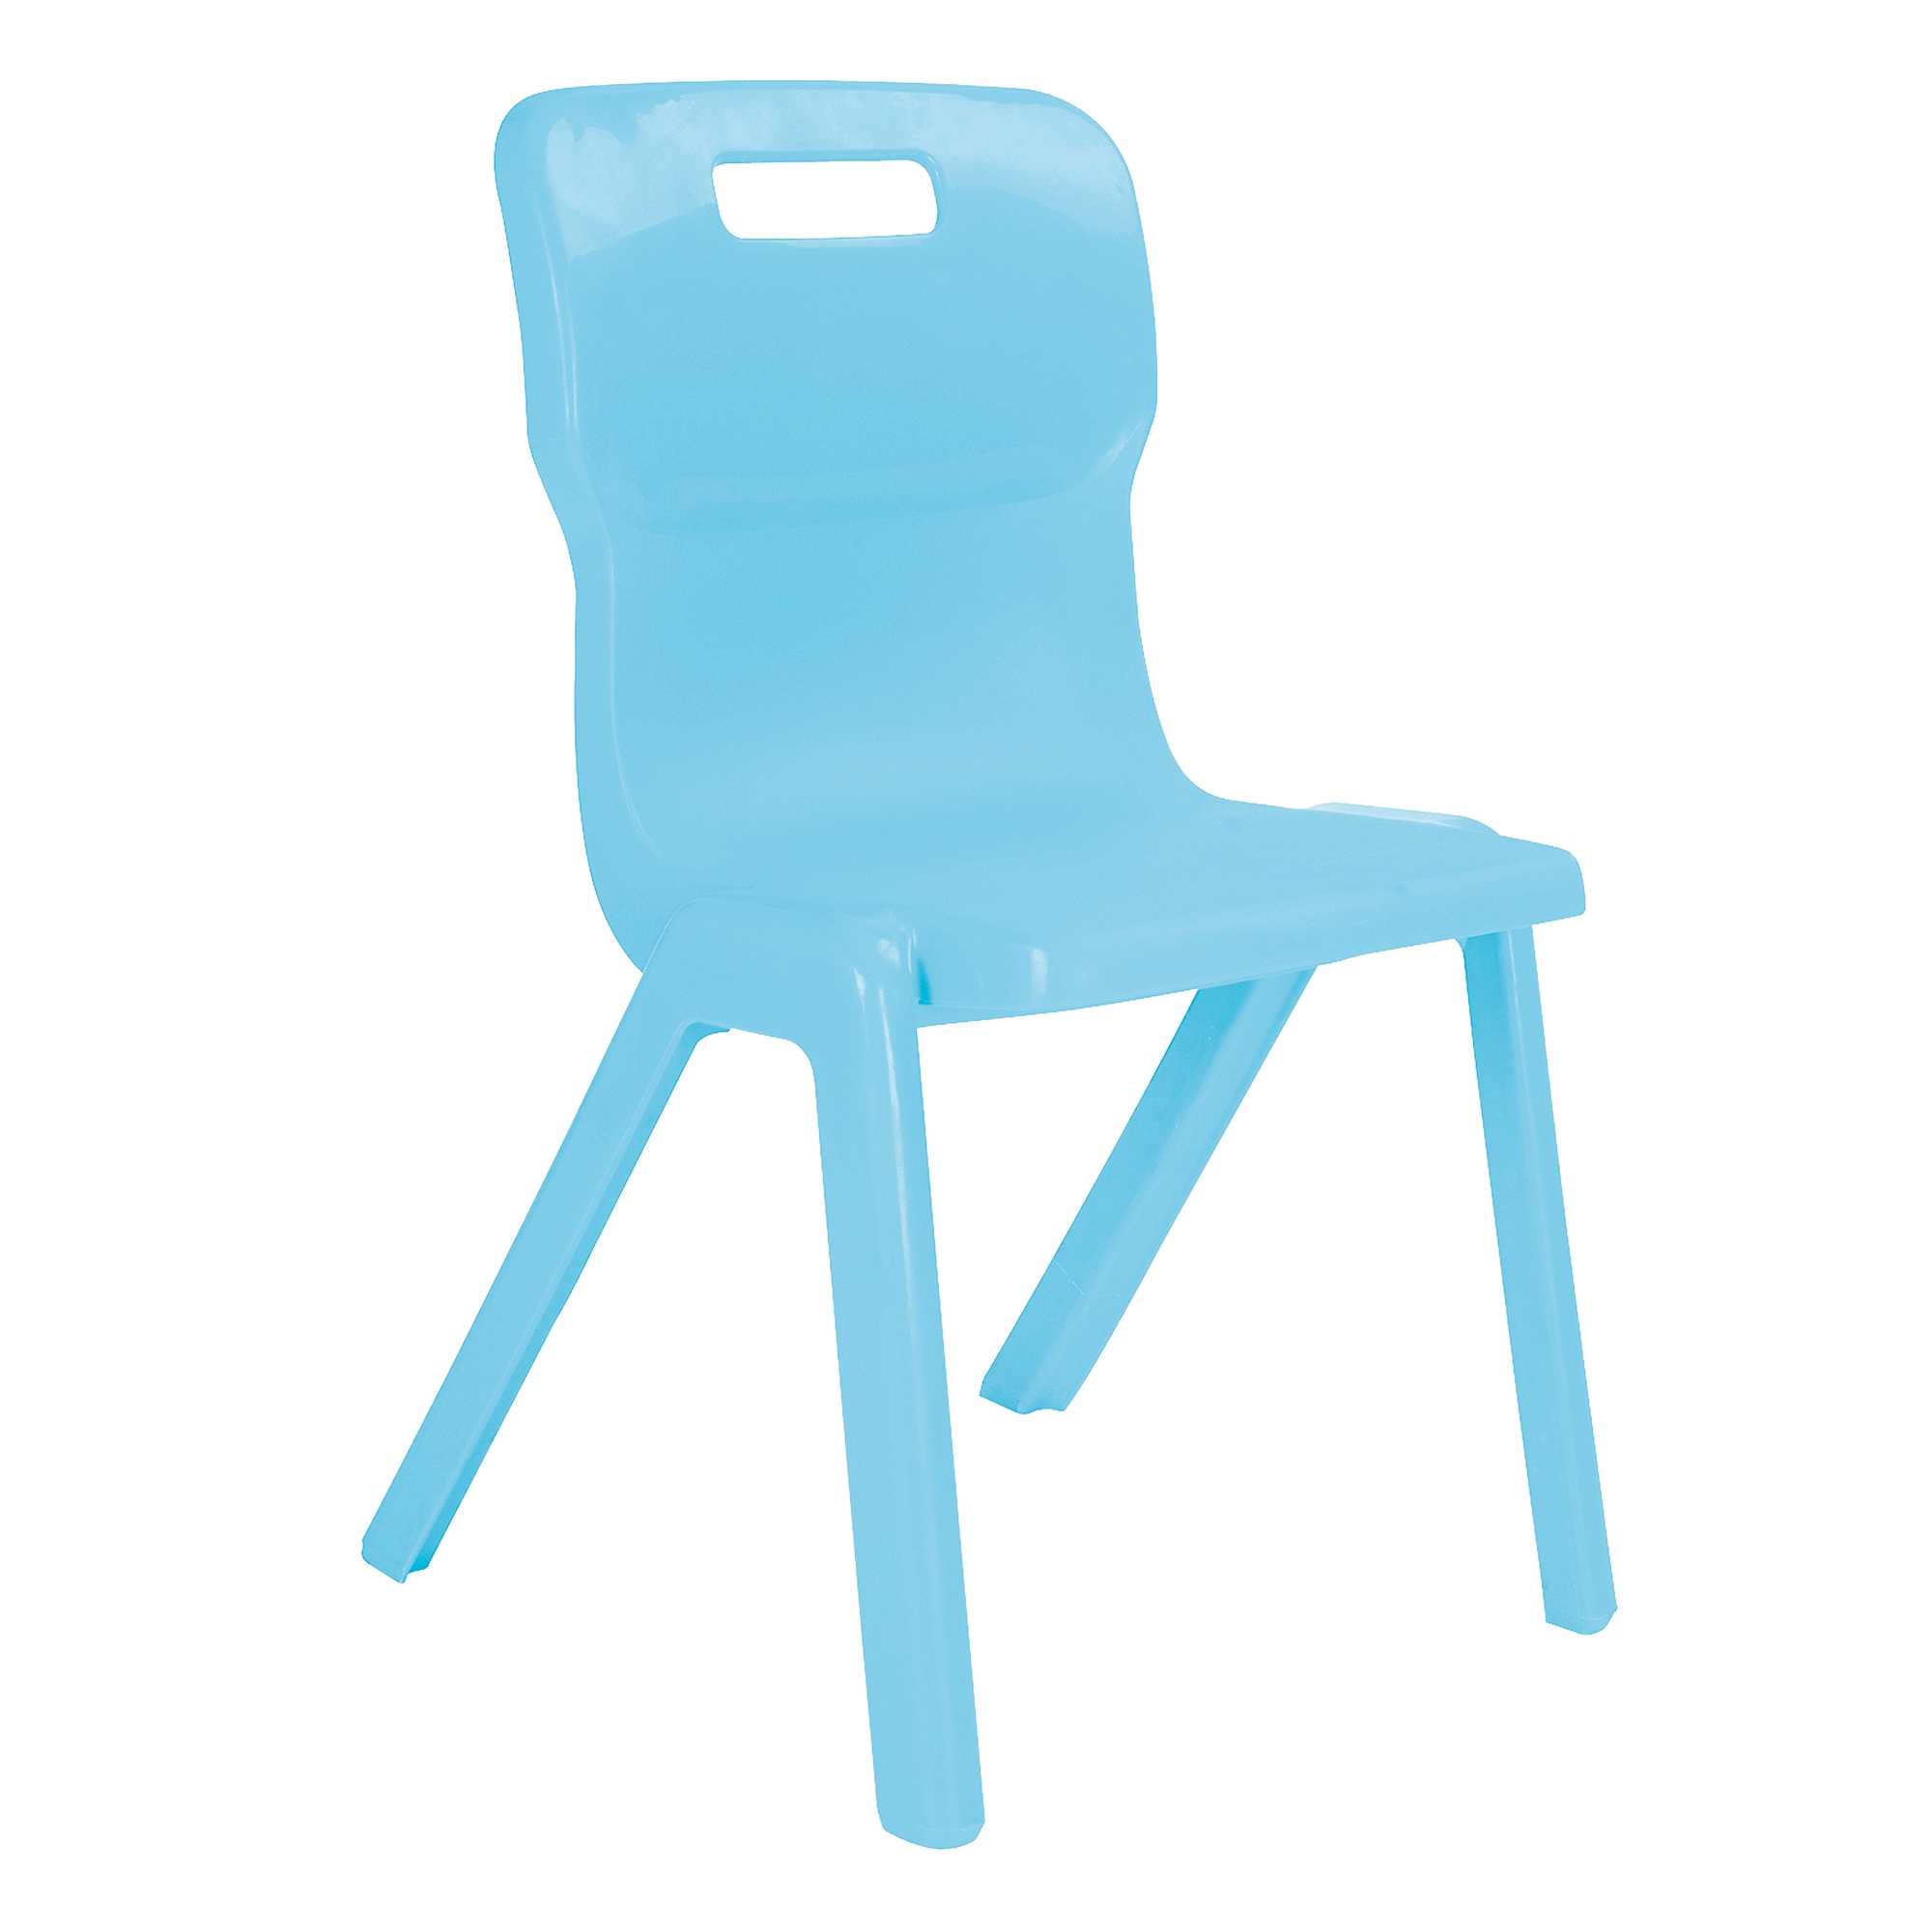 One Piece Titan Chair - Size 5 Ages 11-14 Sky Blue